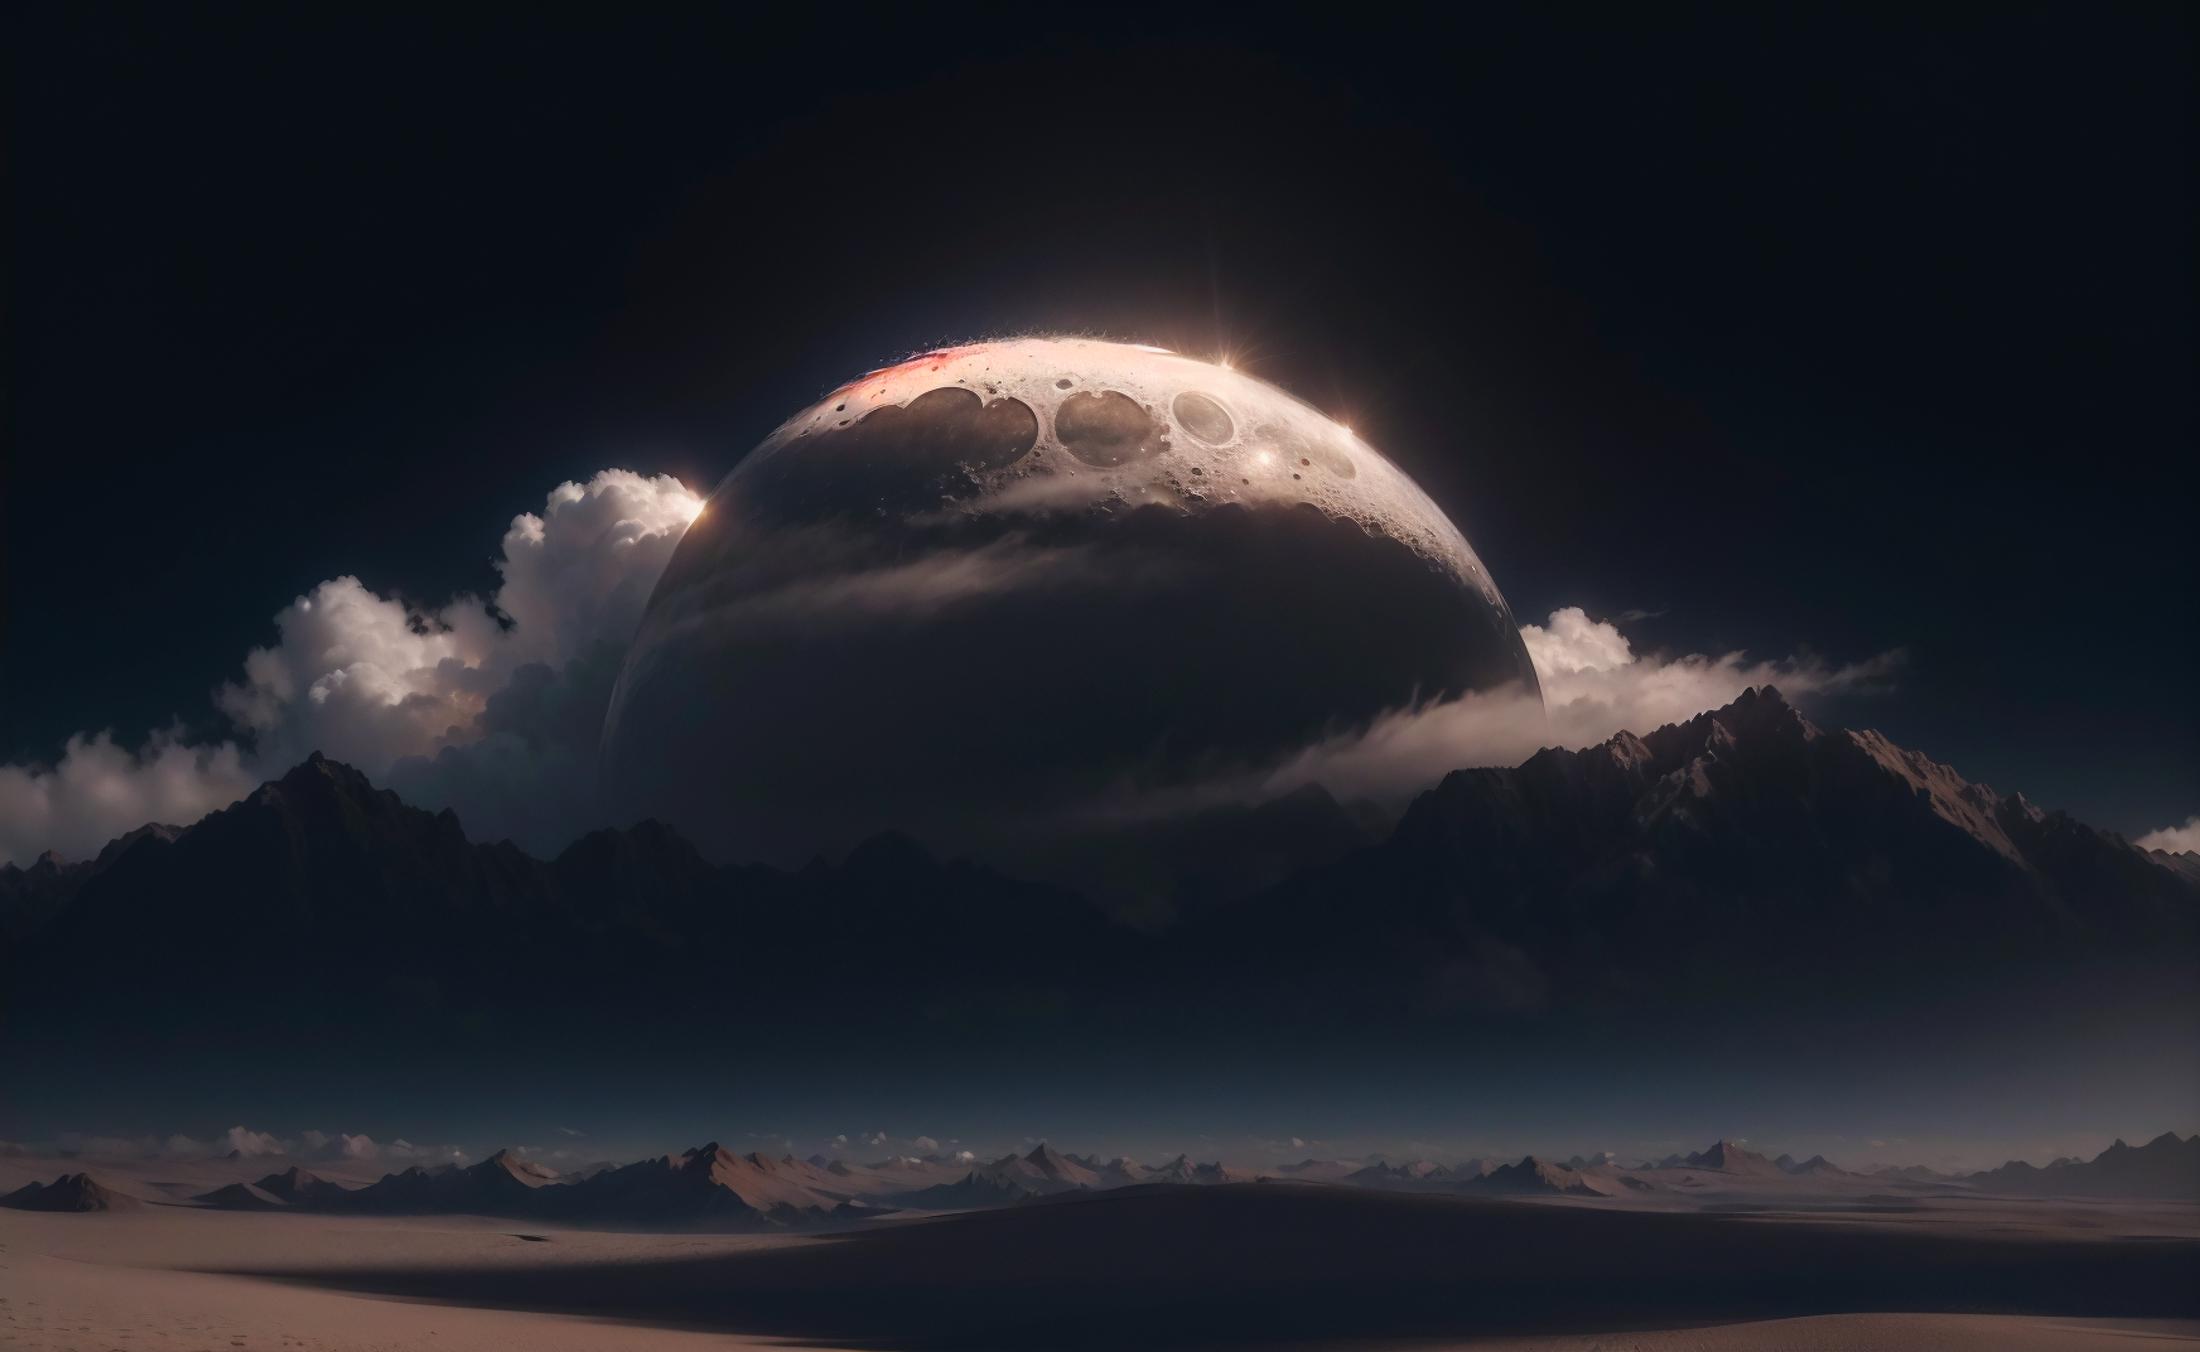 月之概念/Concept  moon image by kuere